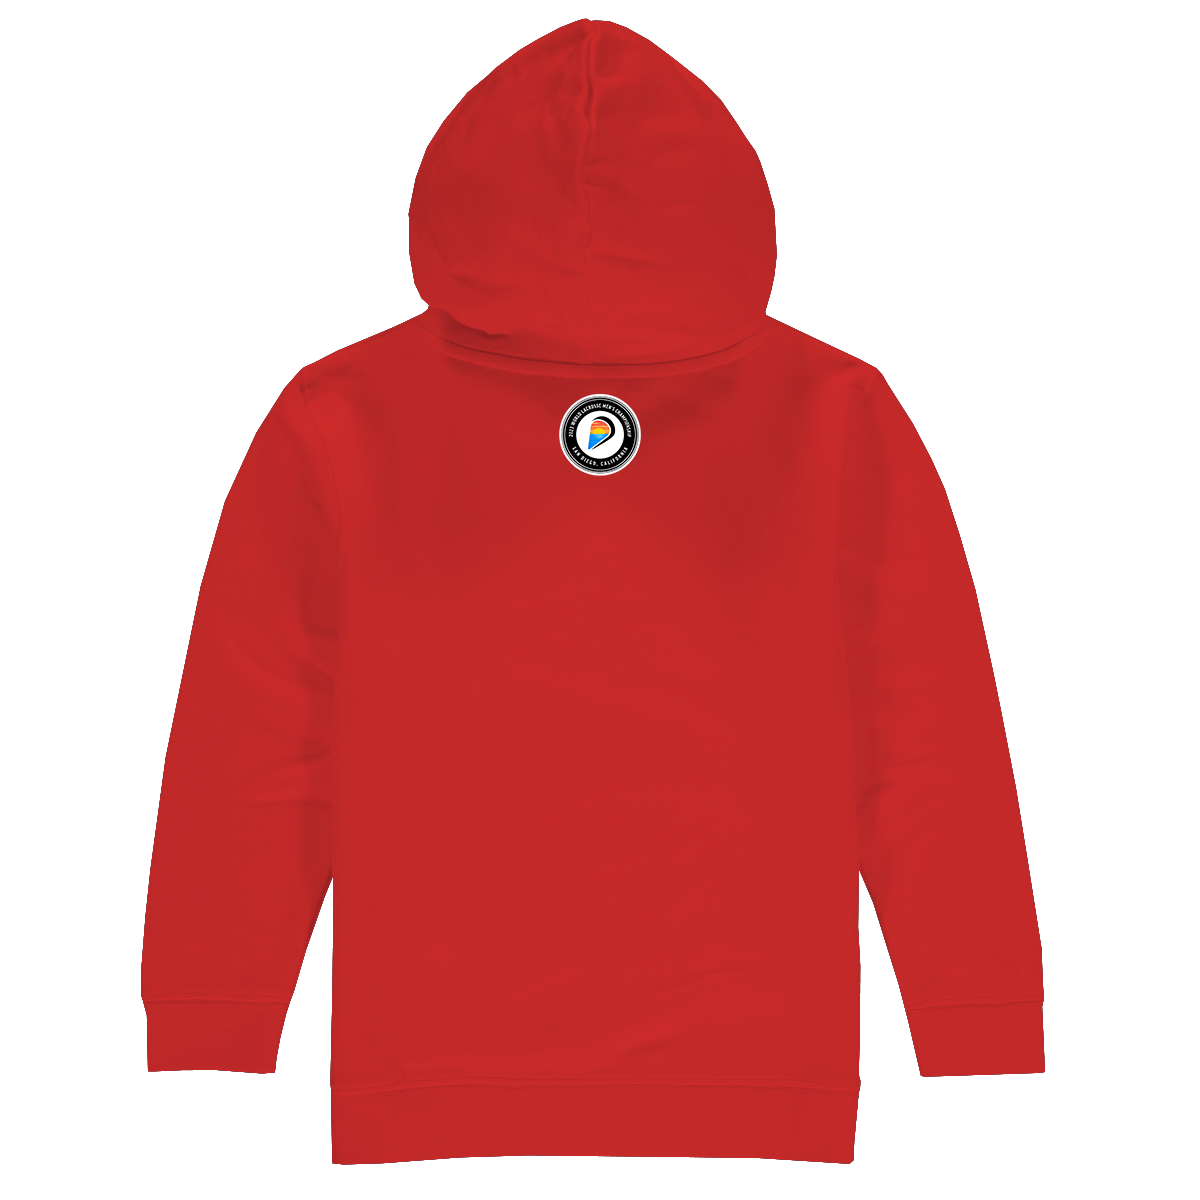 Denmark Premium Unisex Hoodie Sweatshirt Red